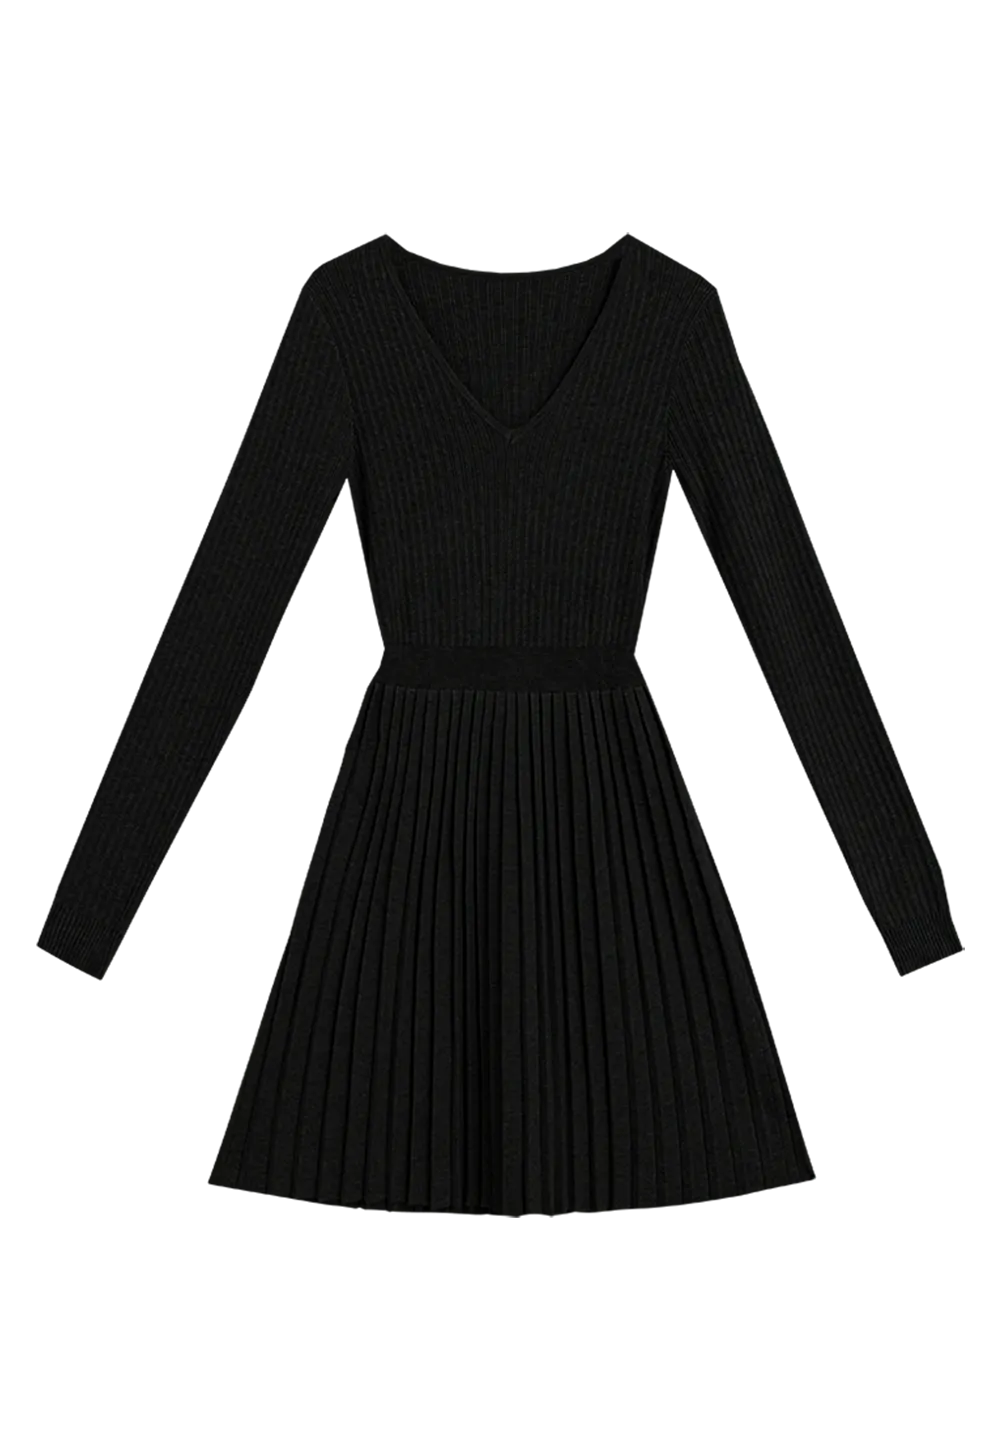 black short sleeve knit dress